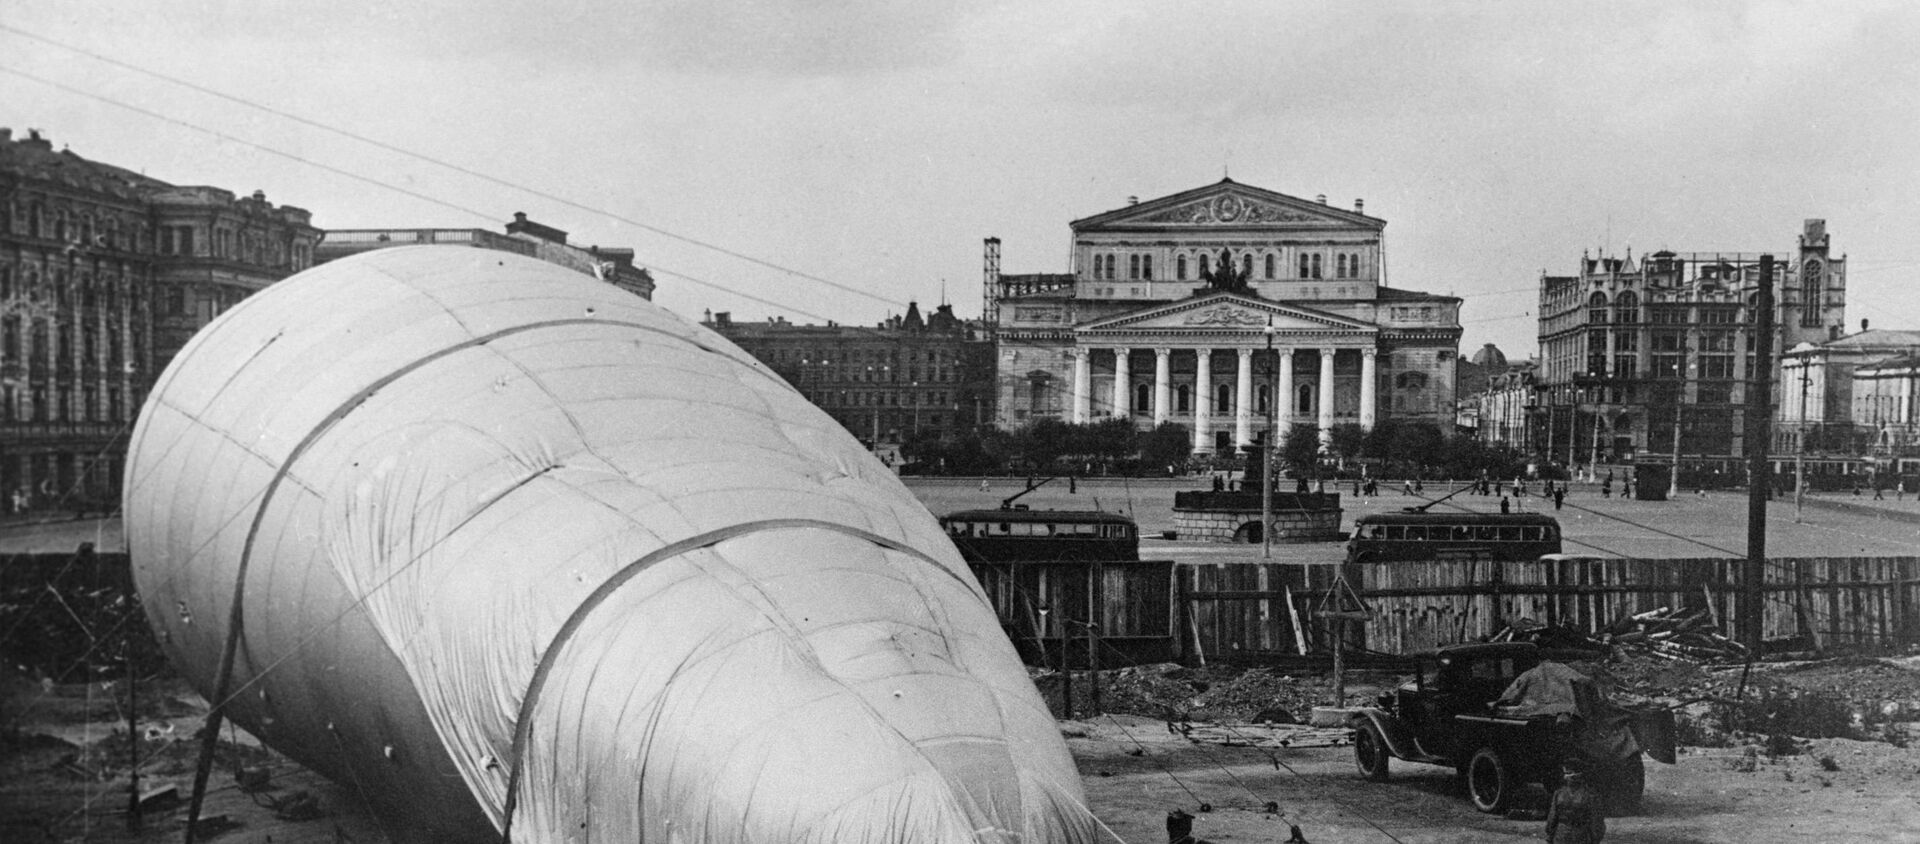 Un zepelín en la Plaza de Revolución en Moscú frente al Teatro Bolshói, 1941 - Sputnik Mundo, 1920, 08.05.2020